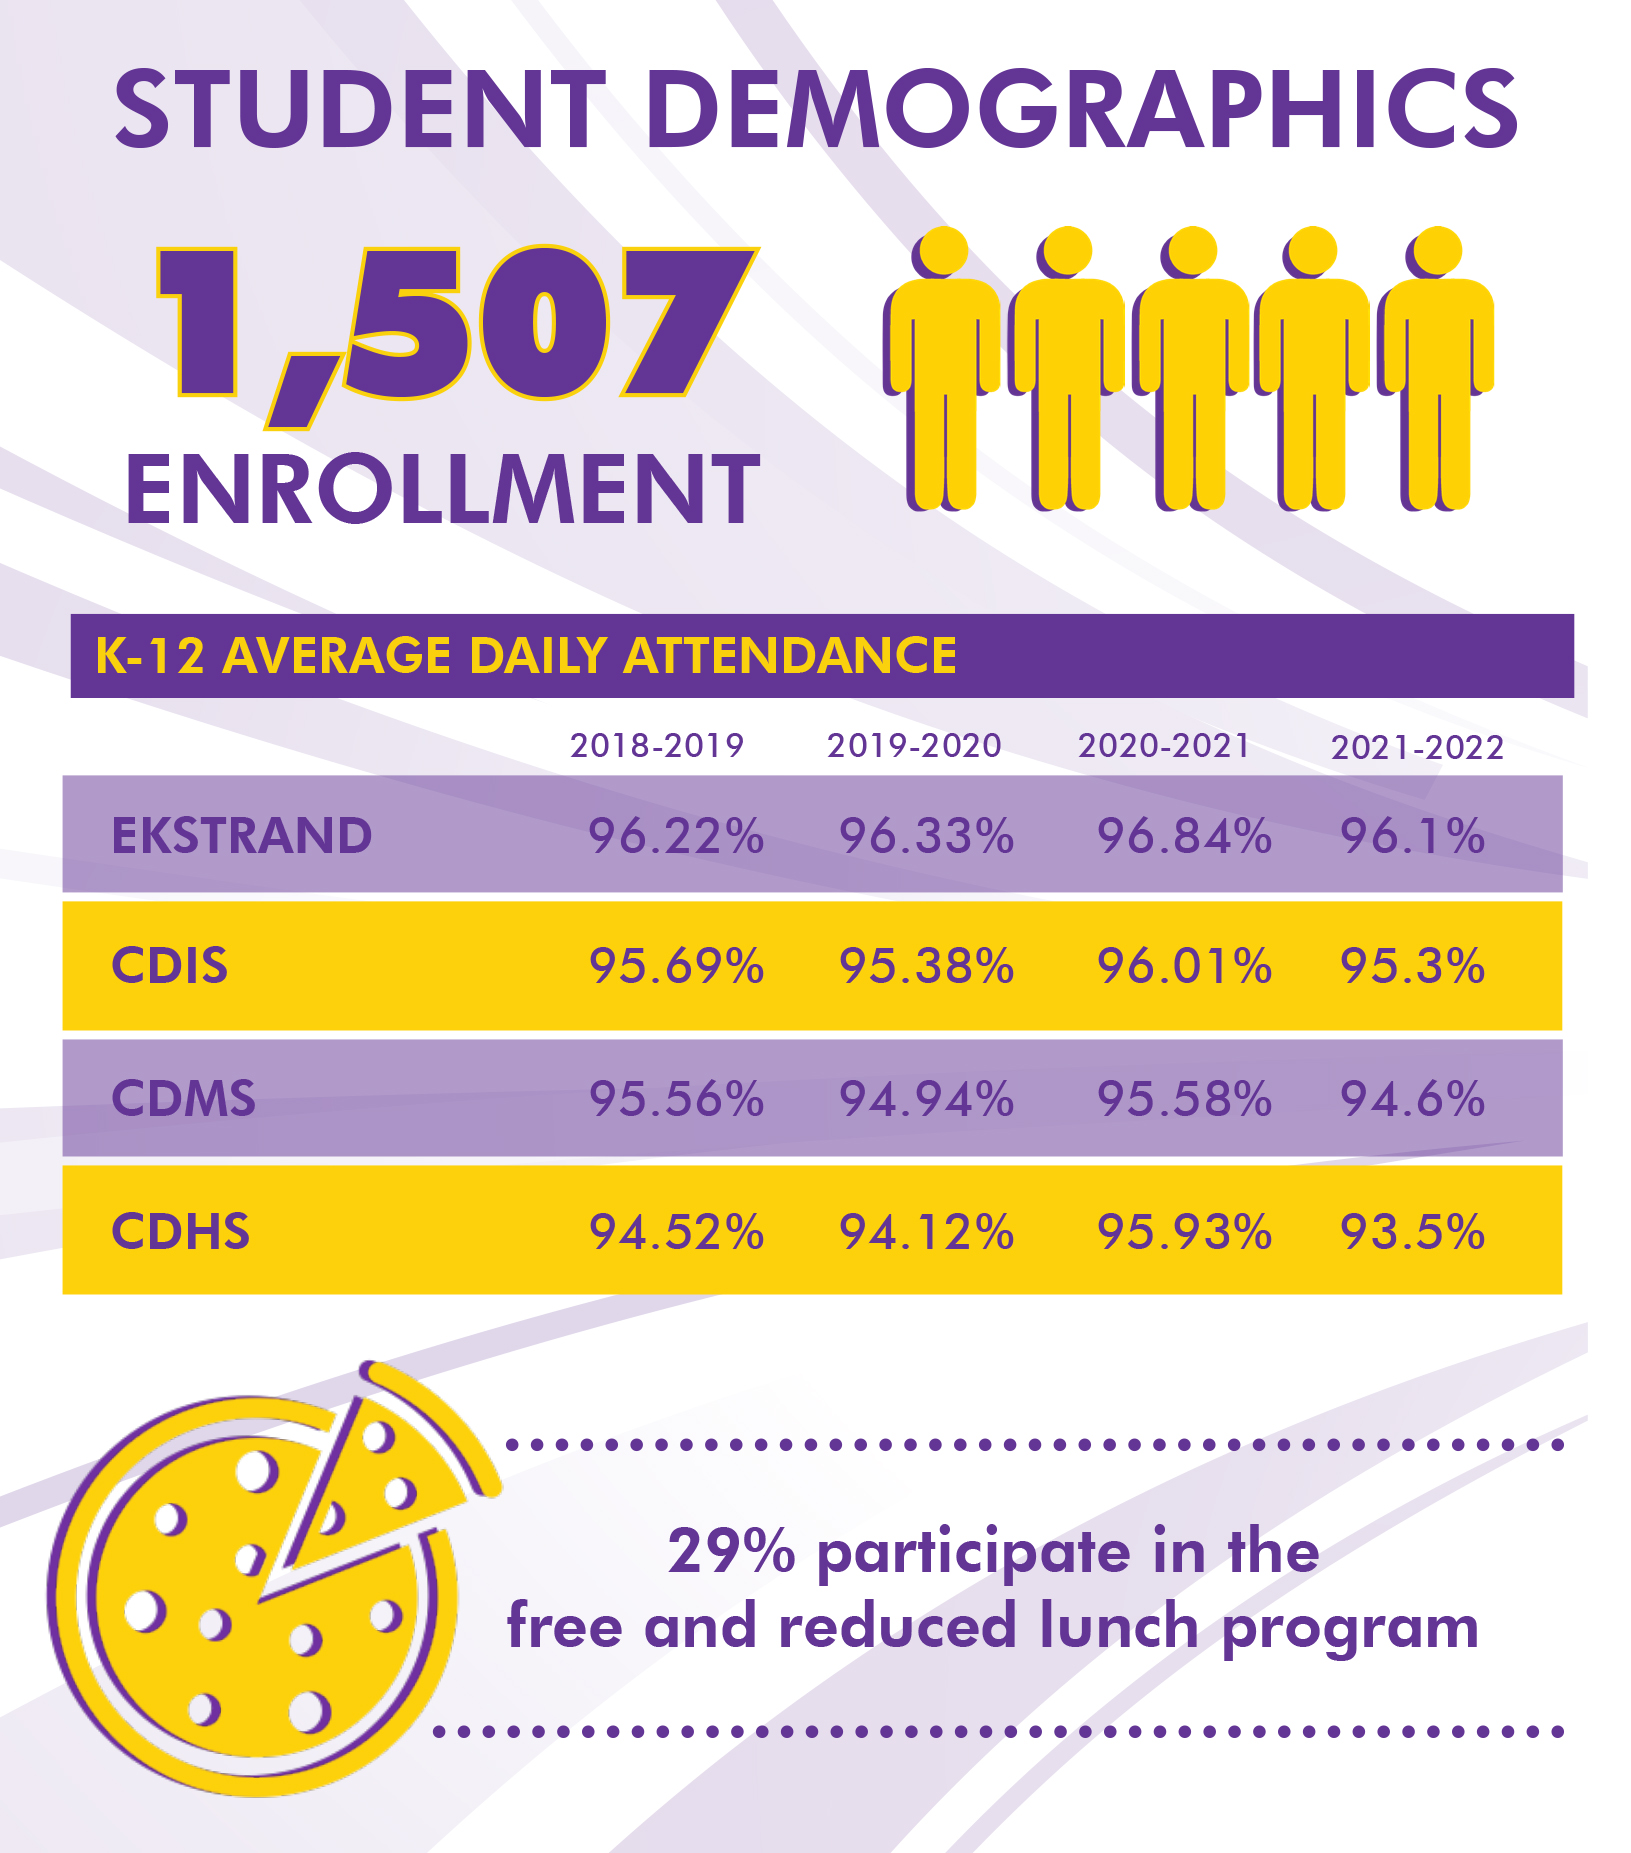 Enrollment statistics: 1507 students in 2021-2022